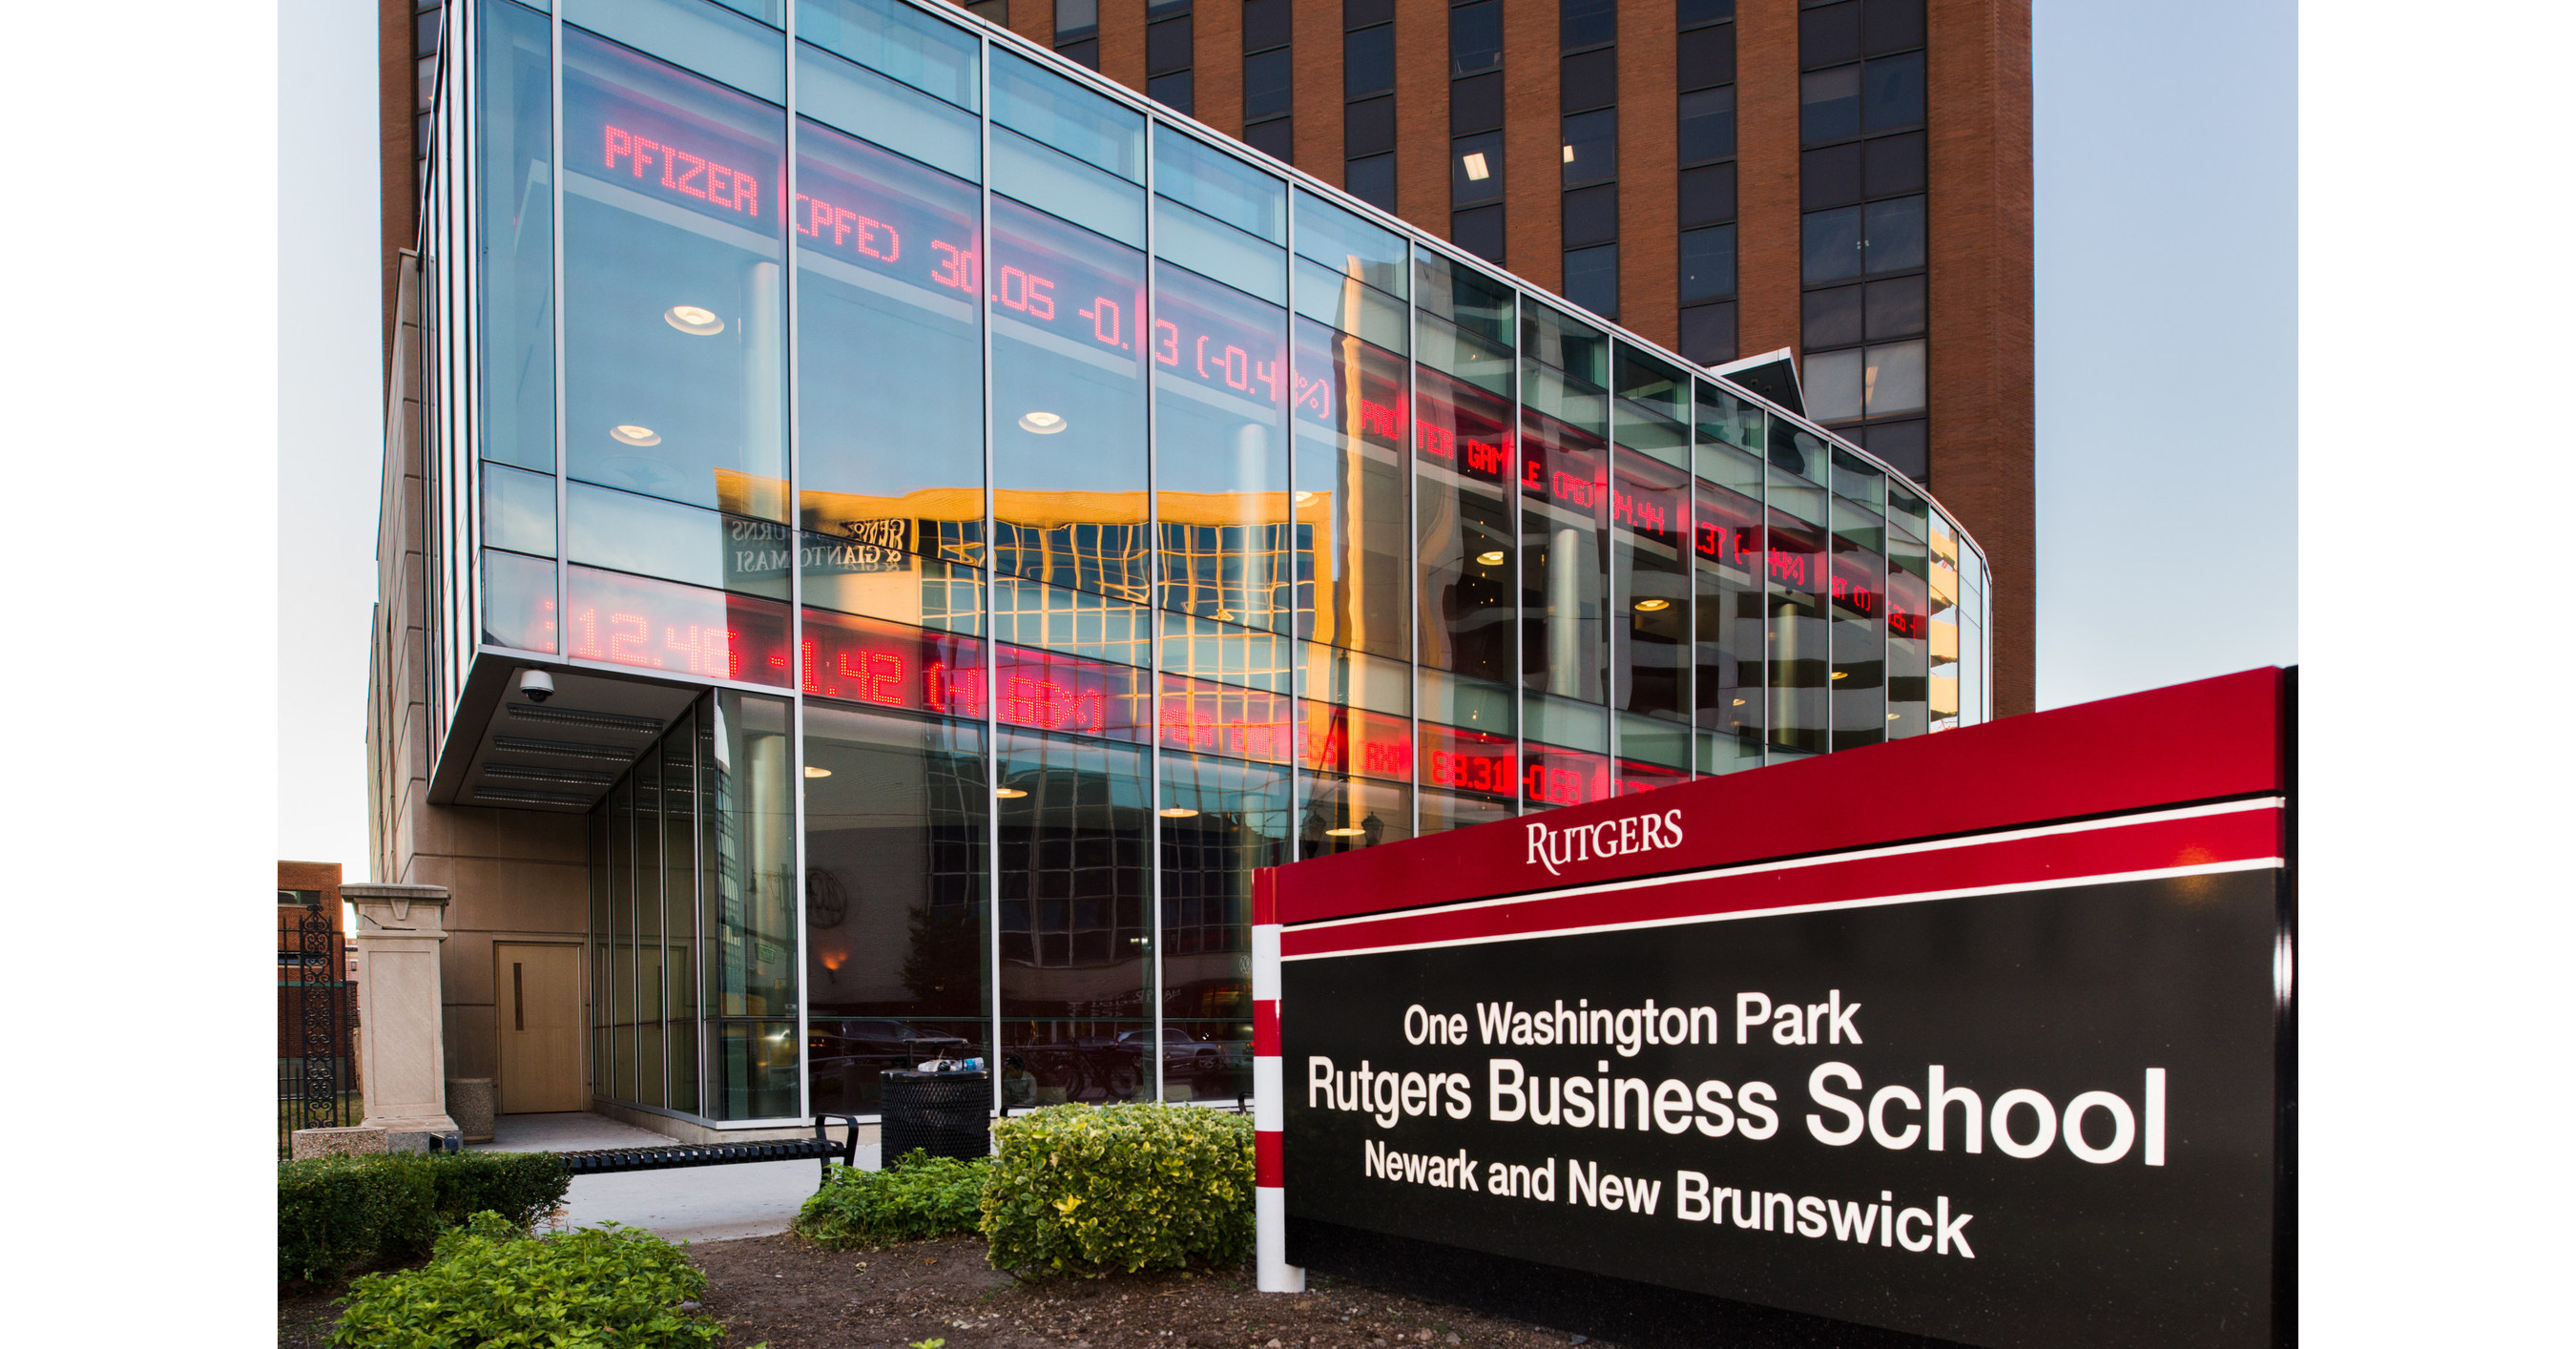 Rutgers Business School symposium on Nov. 7 to address how executives